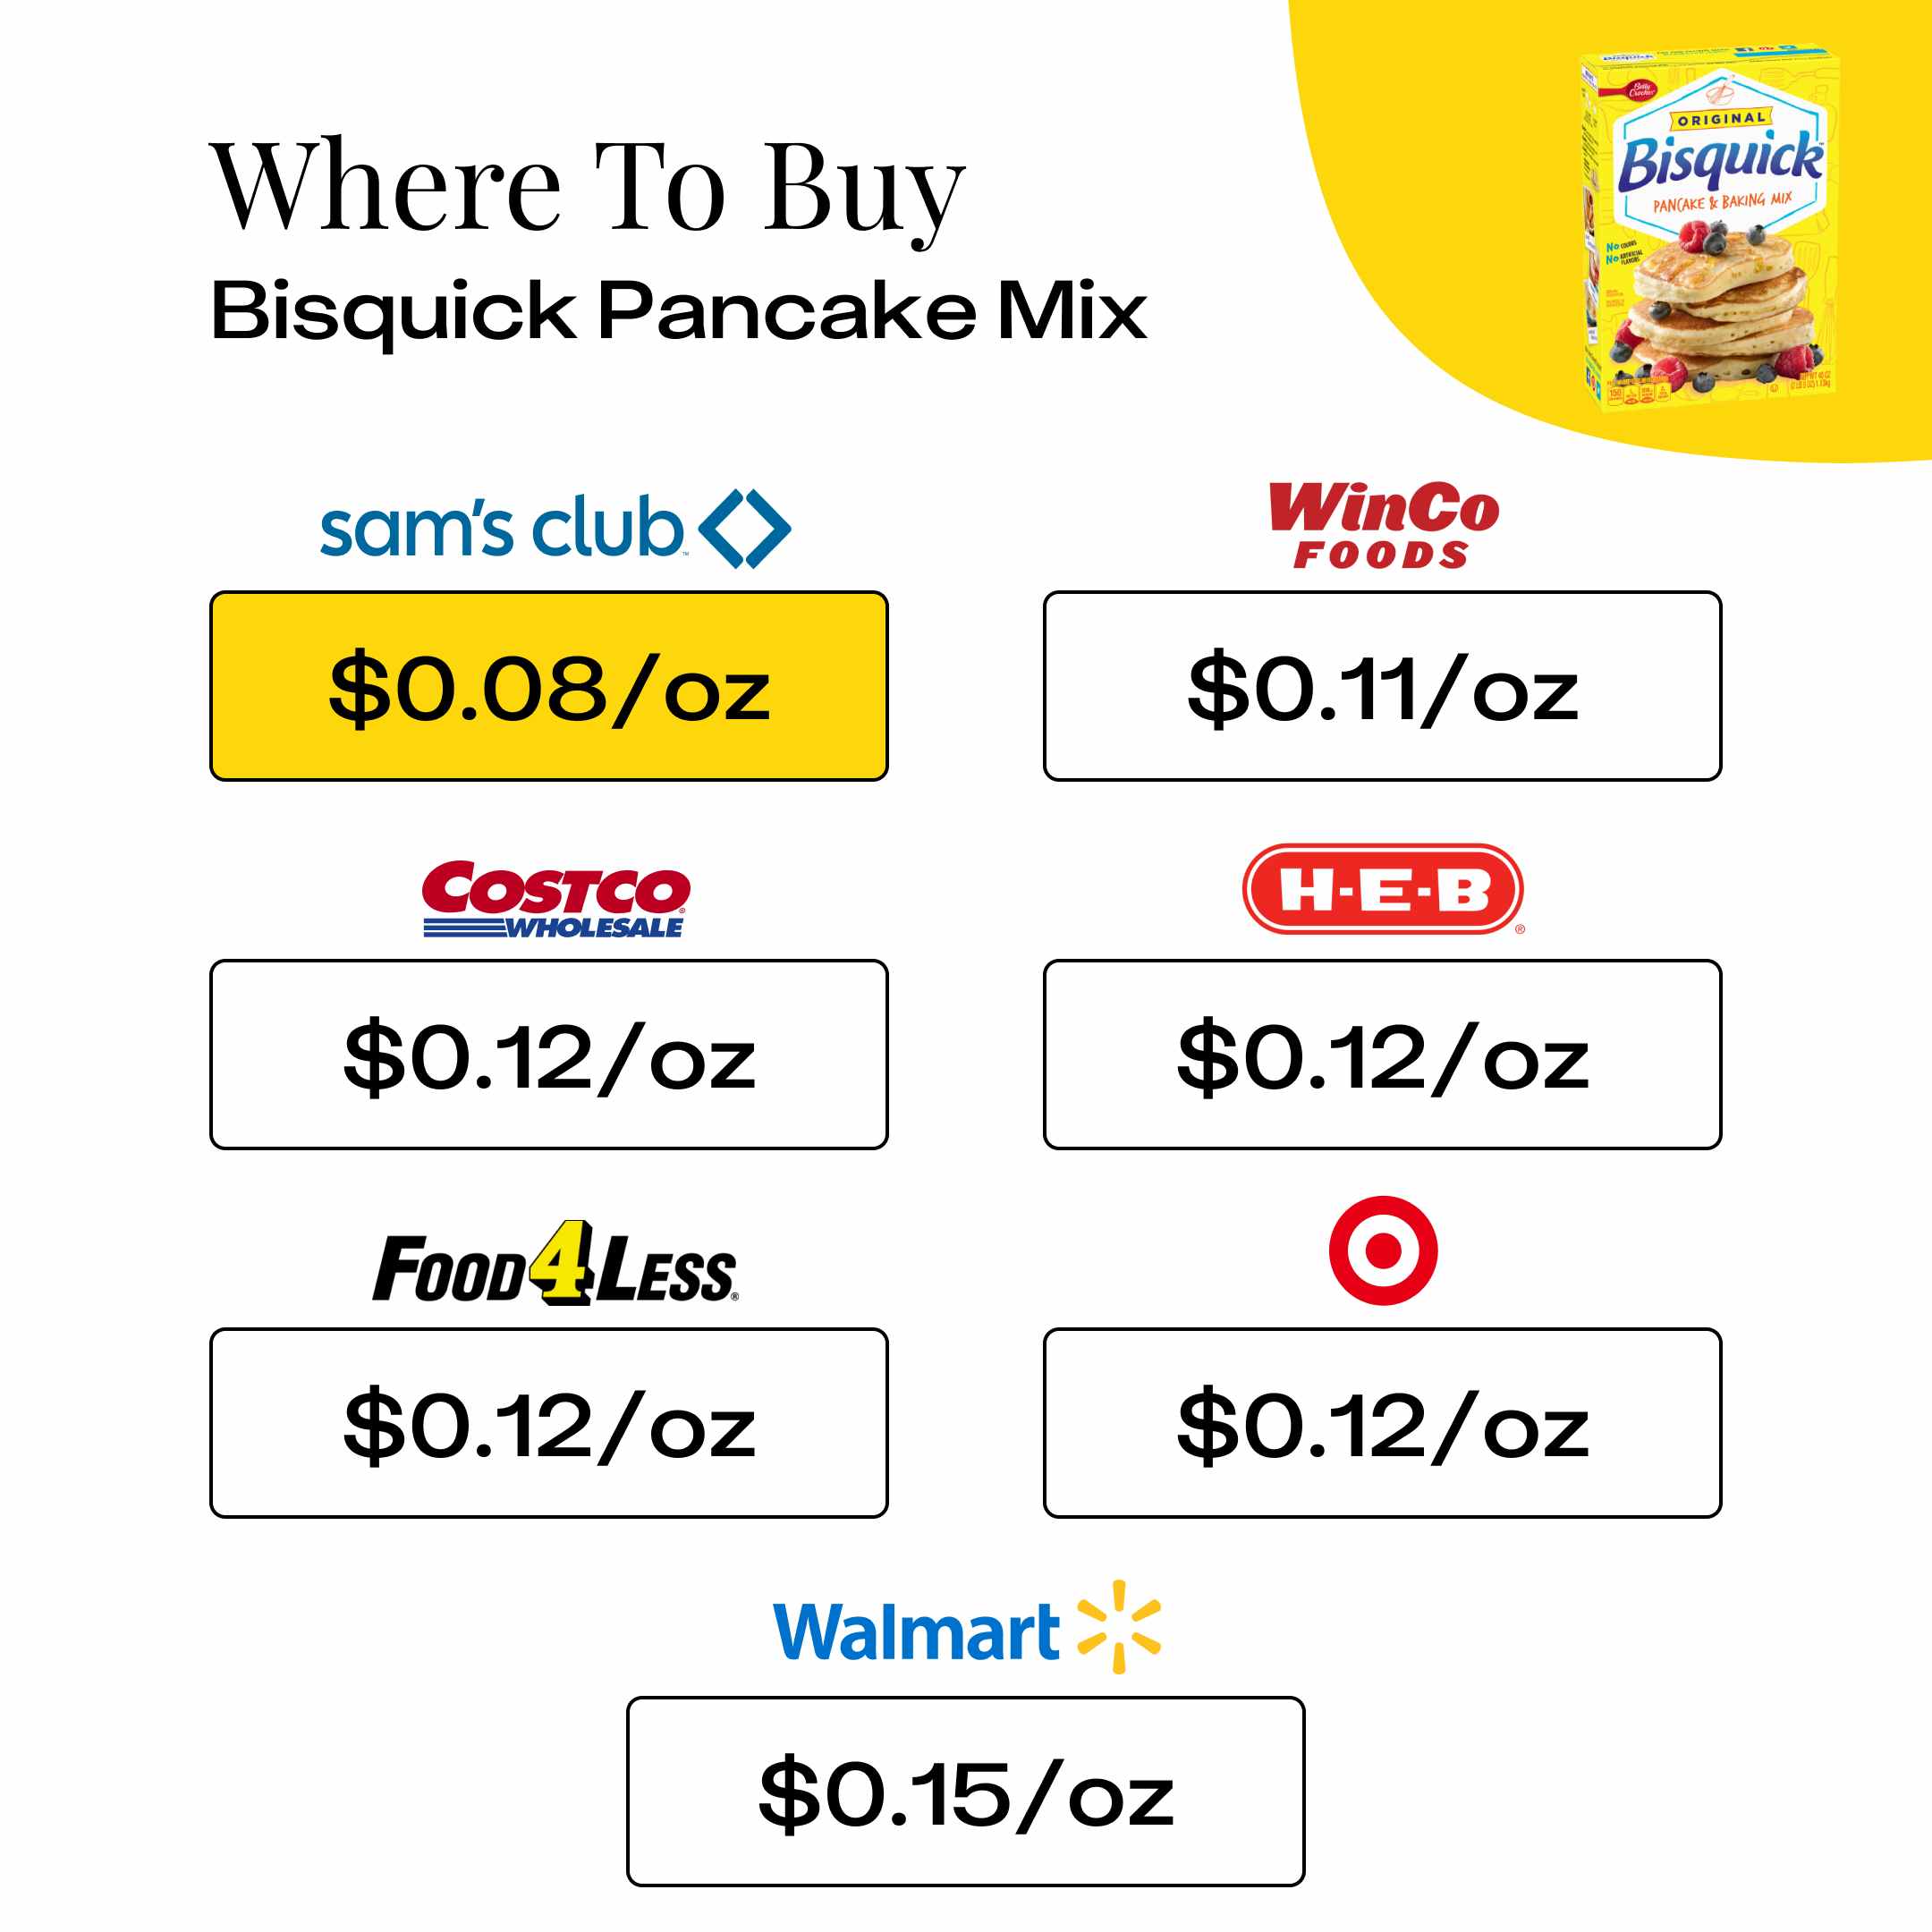 Where To Buy Bisquick Pancake Mix